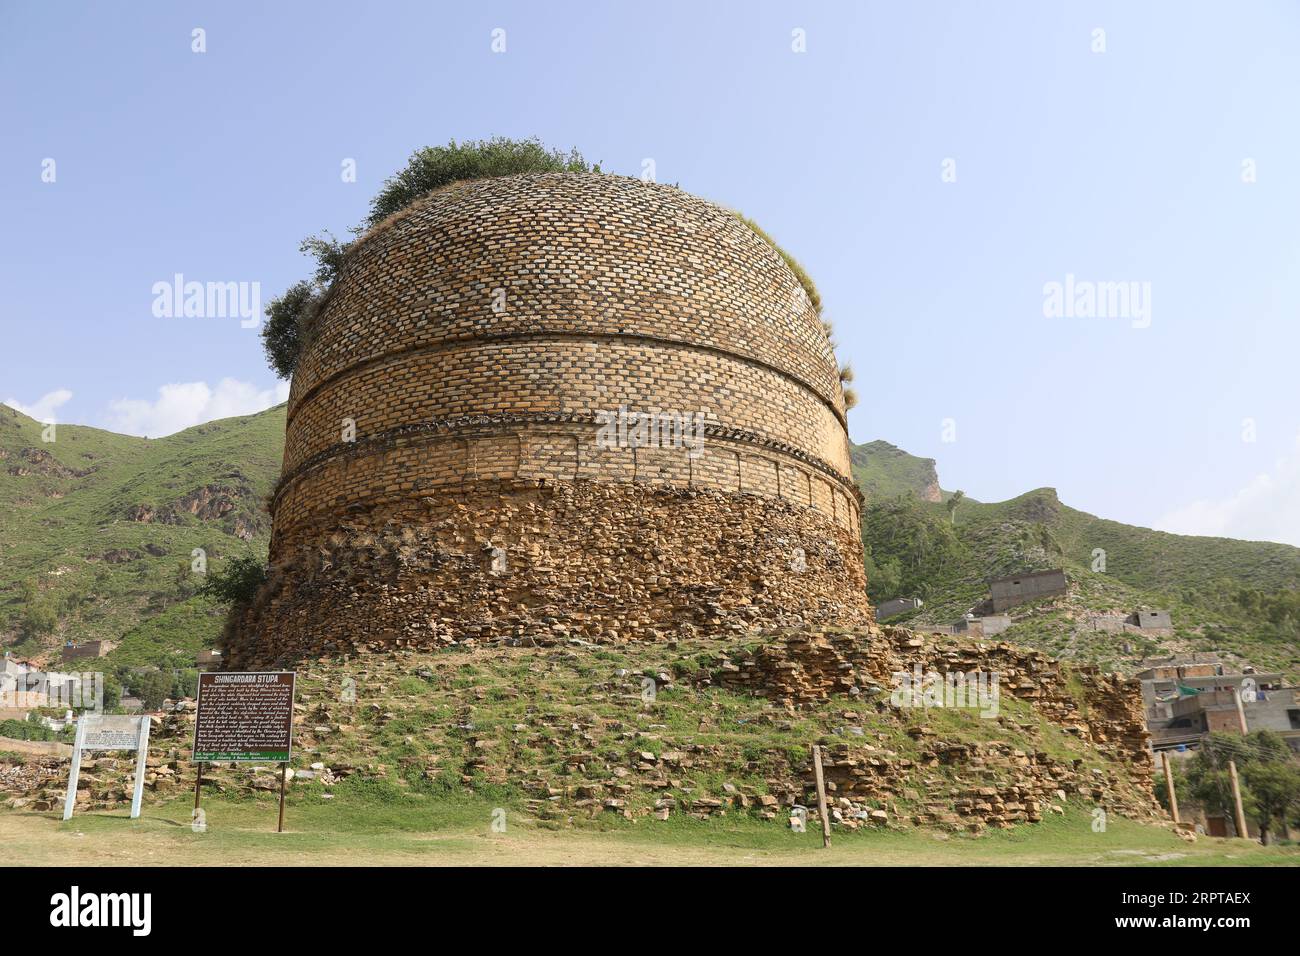 Shingardara Stupa in the Swat Valley of Pakistan Stock Photo